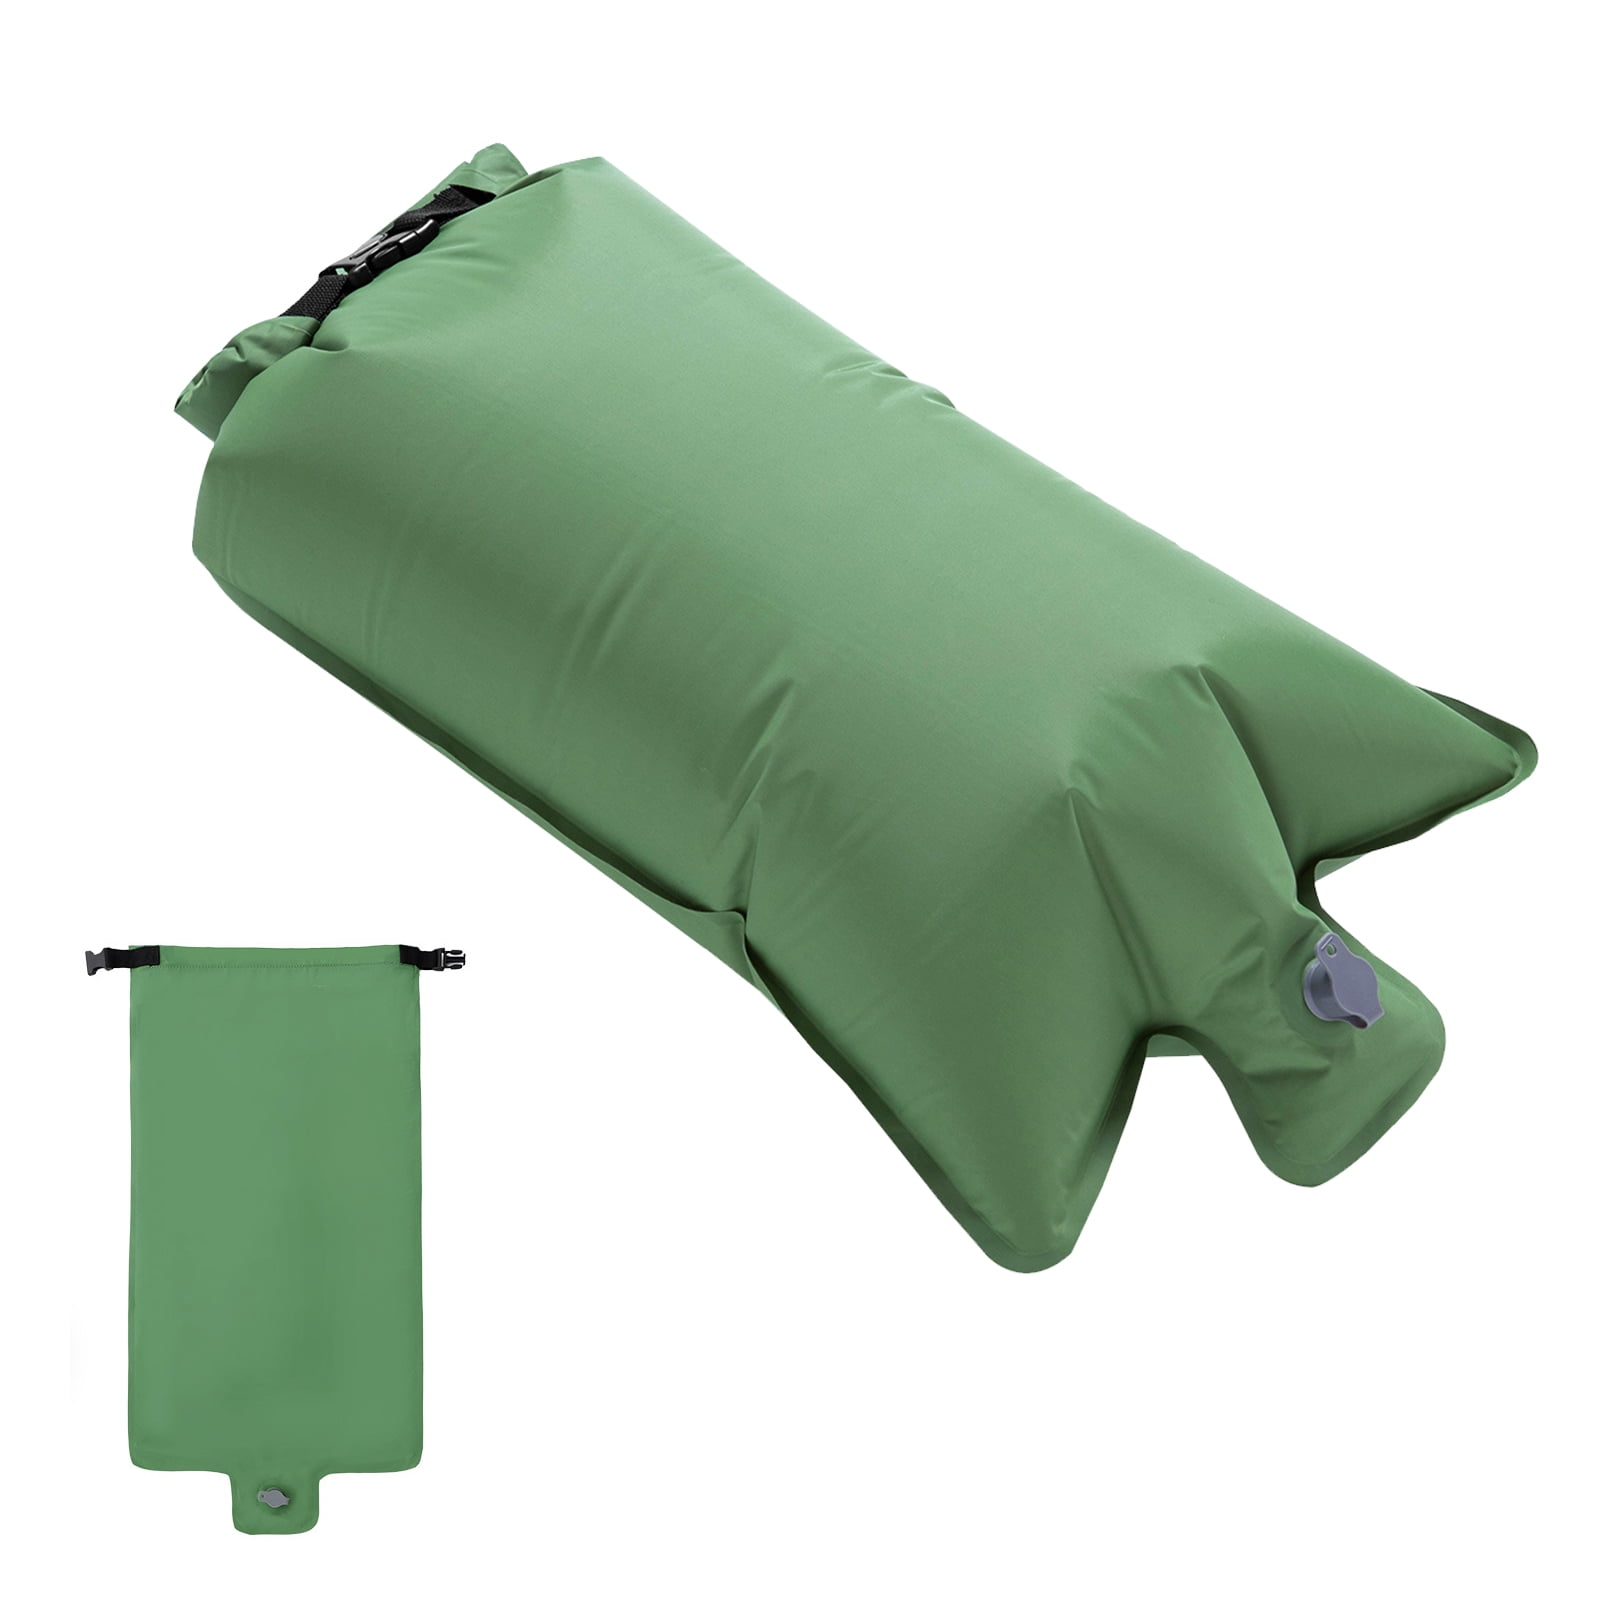 Outdoor Ultralight Swimming Flotation Bag Inflatable Waterproof Bag Dry Bag PVC Bag for Hilking Camping 